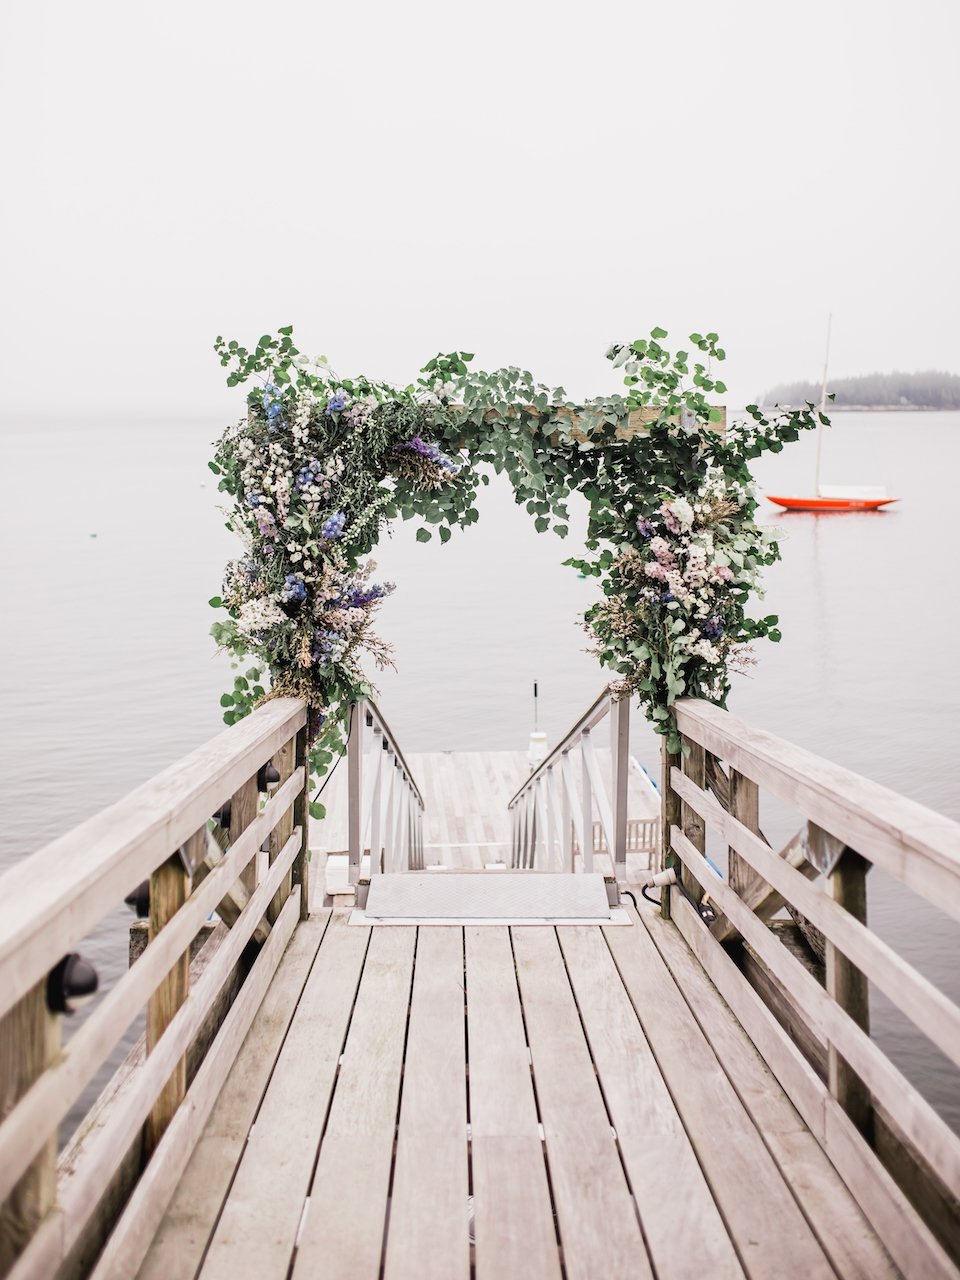  Maine Seasons Events wedding dock florals Brandon Lata Photography 